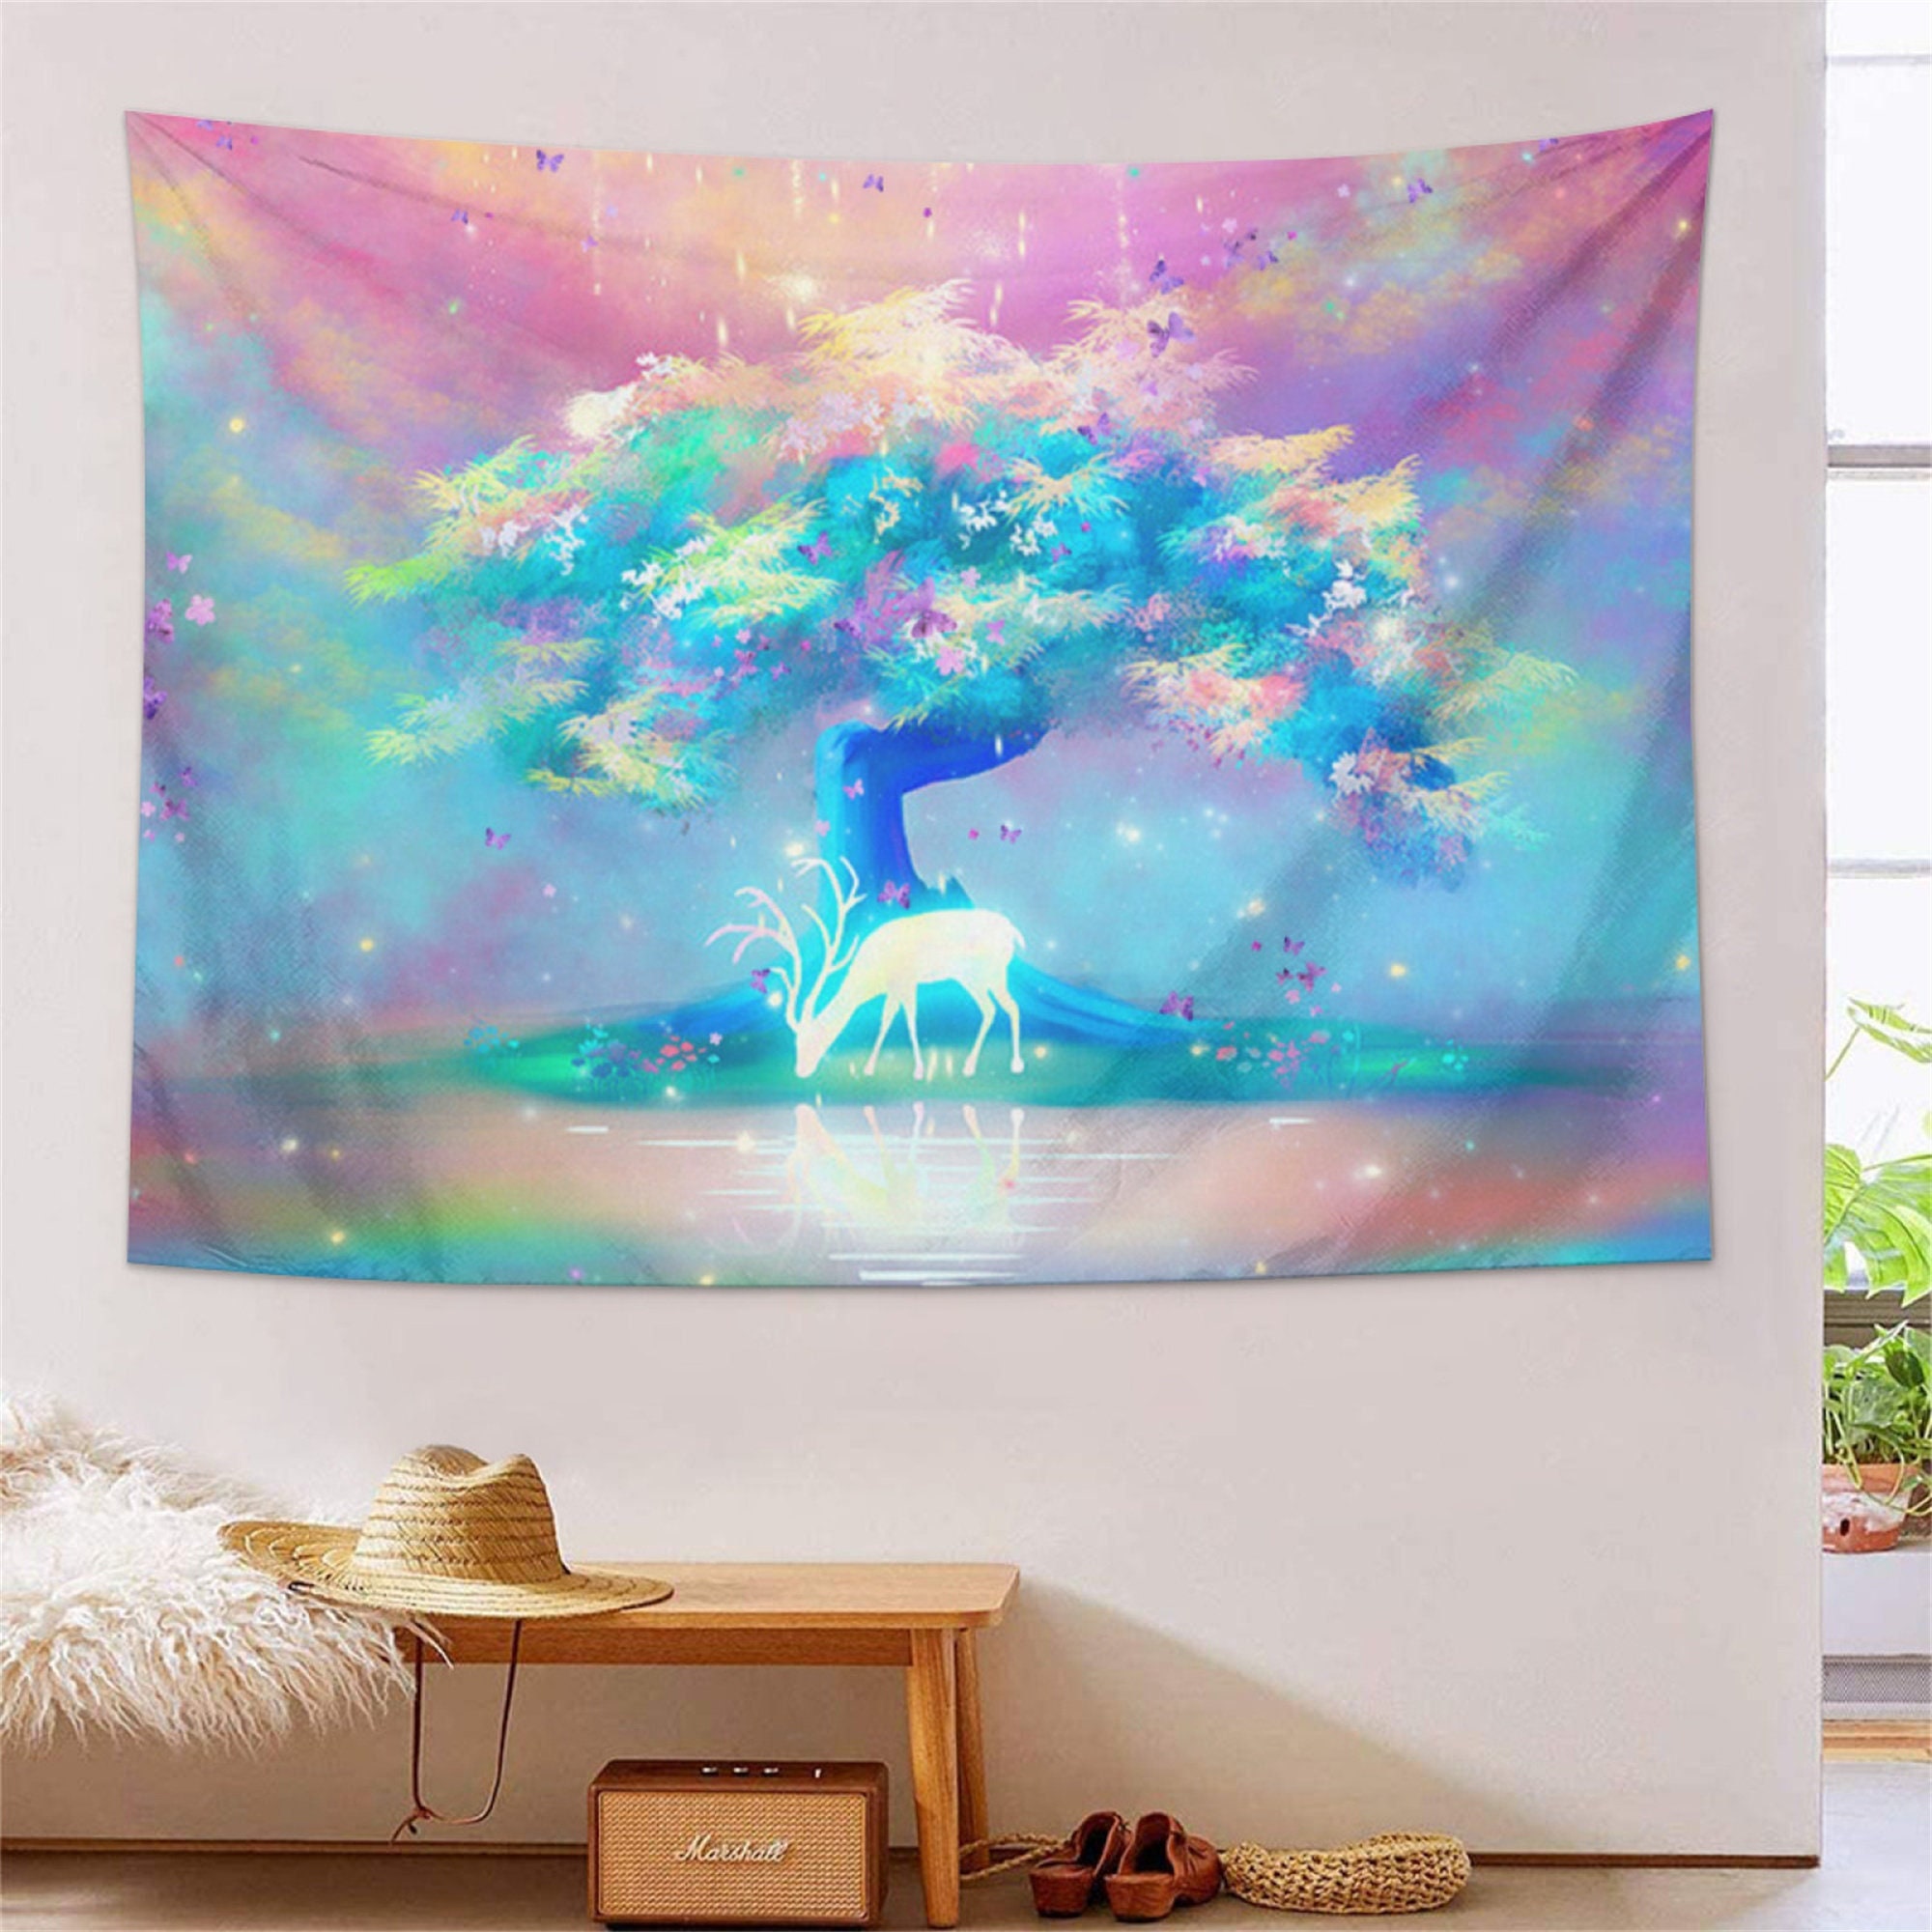 Takashi-Murakami-Flower-Tapestry Wall Hanging Art For Dorm Decor For Living  Room Bedroom Indian Decor Hippie Mural Living College Dorm Room Poster  (80x60 Inches) : : Home